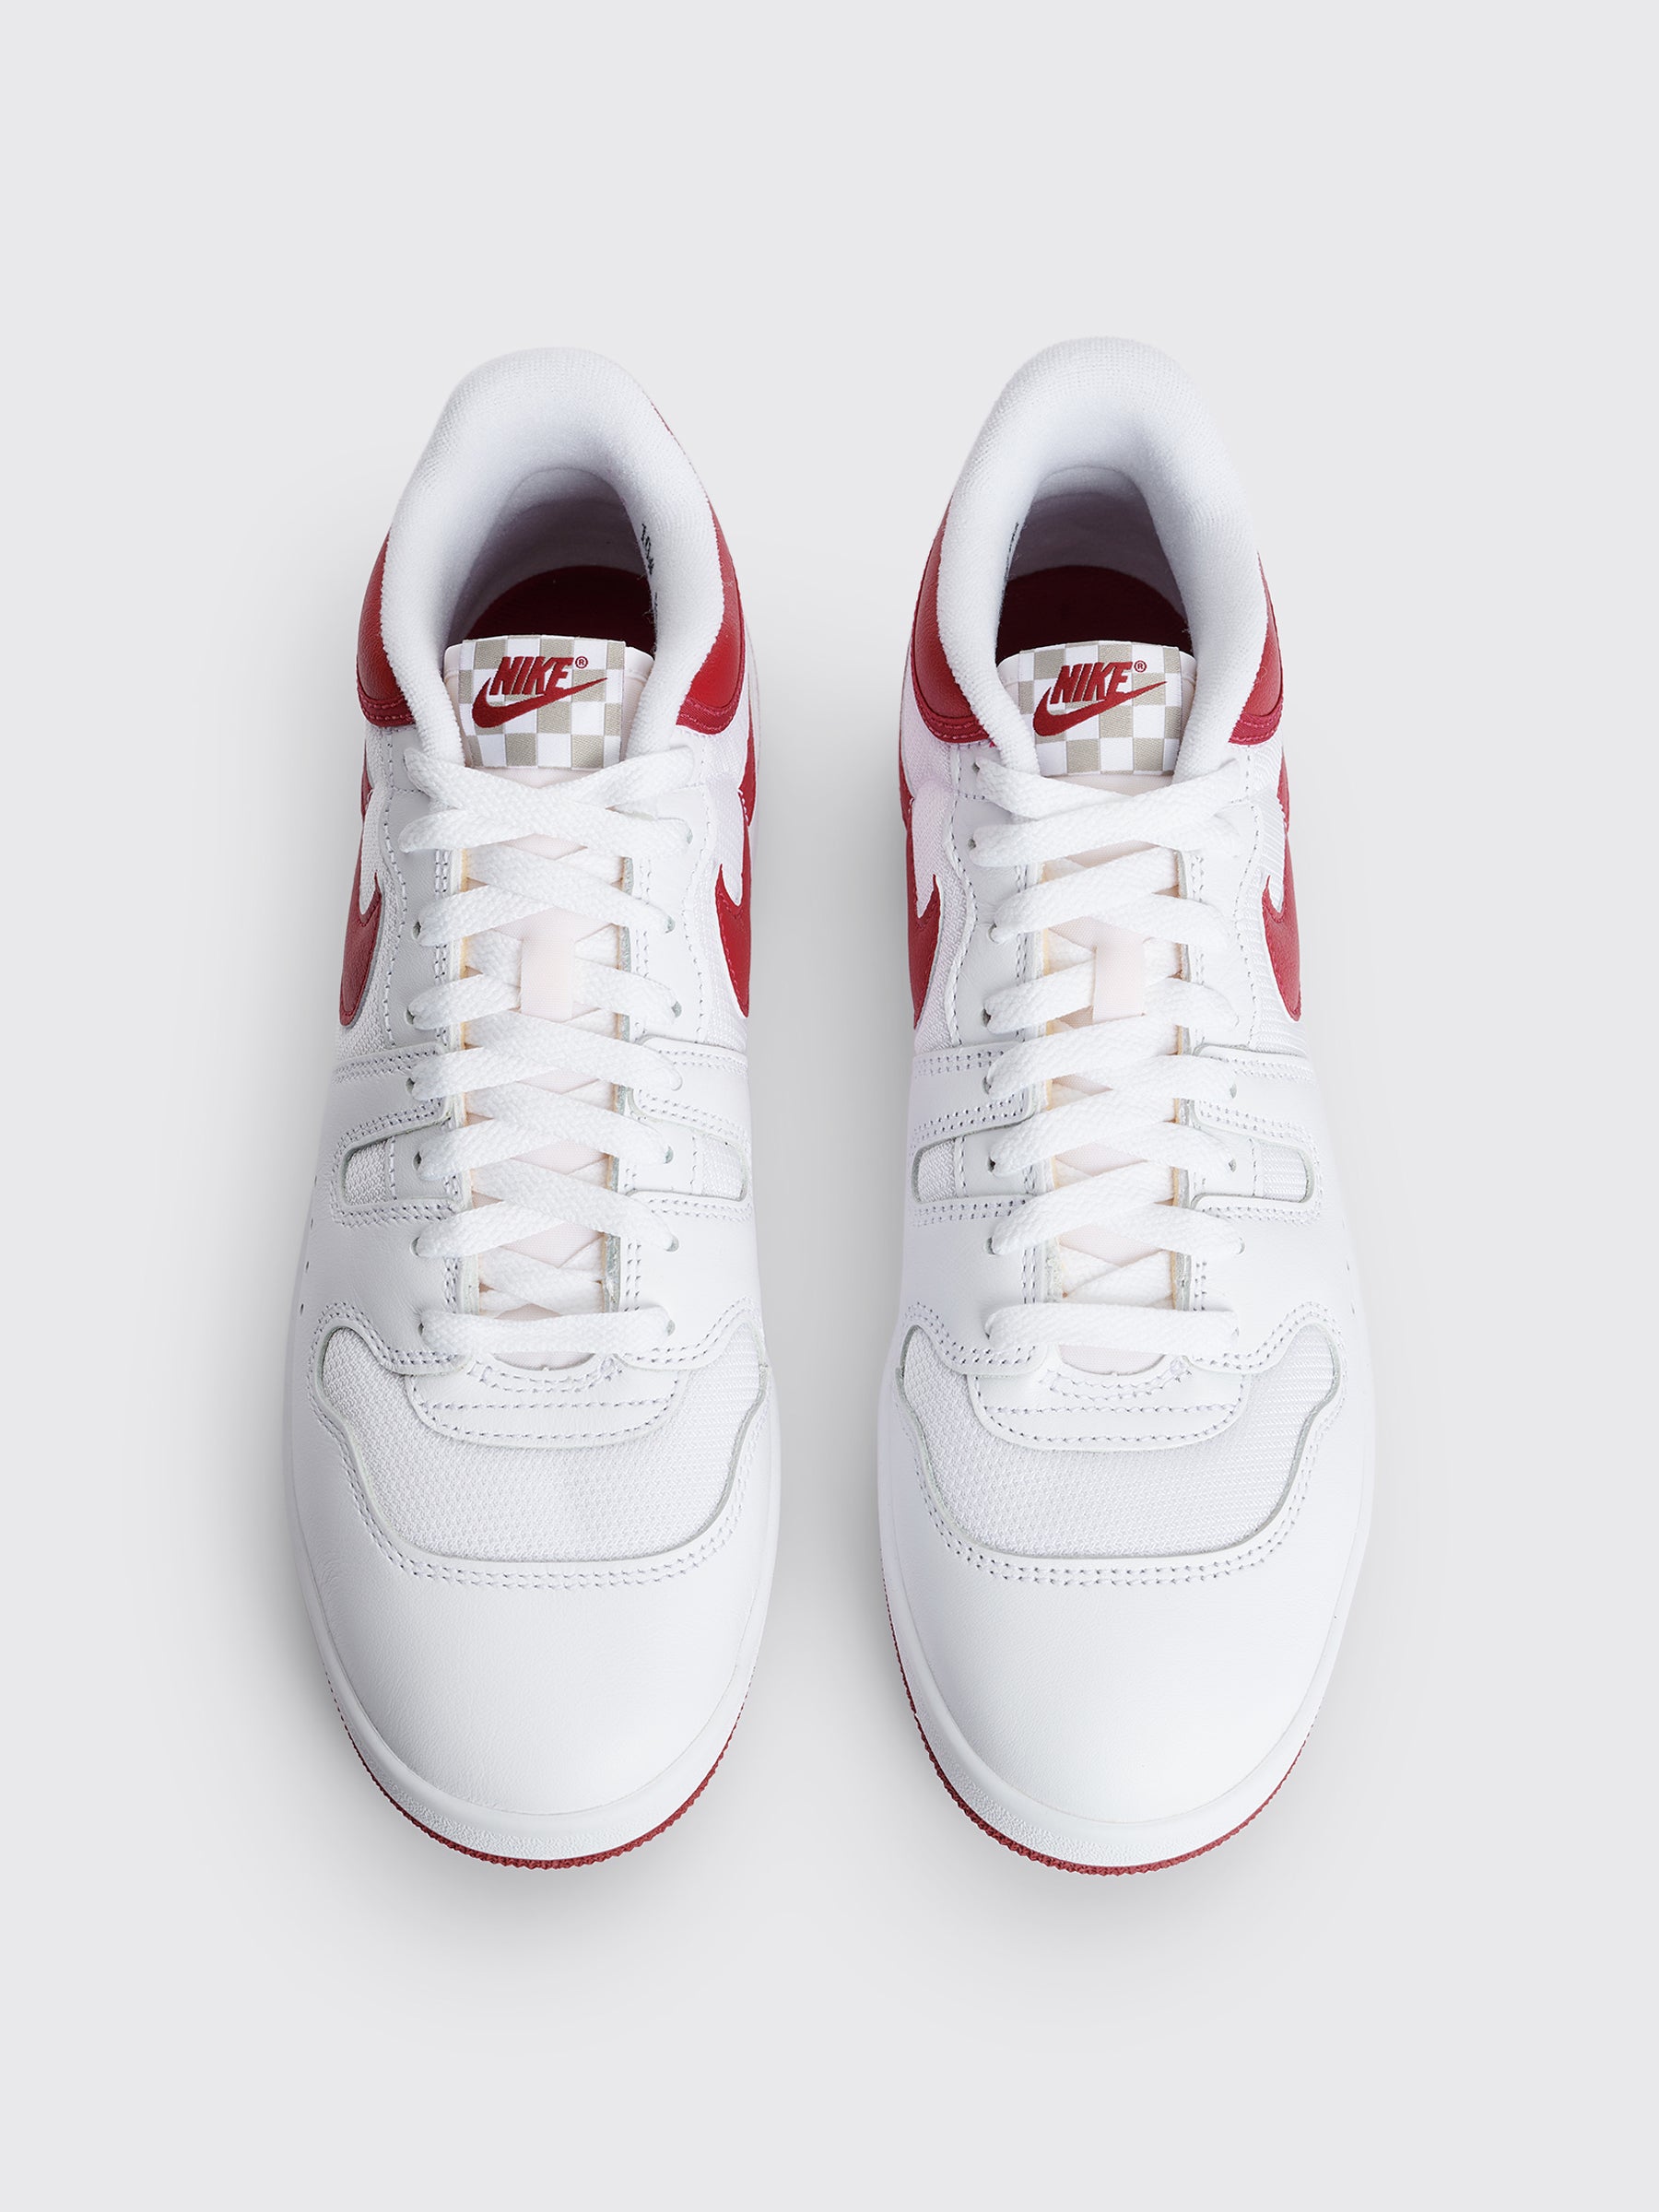 Nike Mac Attack QS SP White / Red Crush